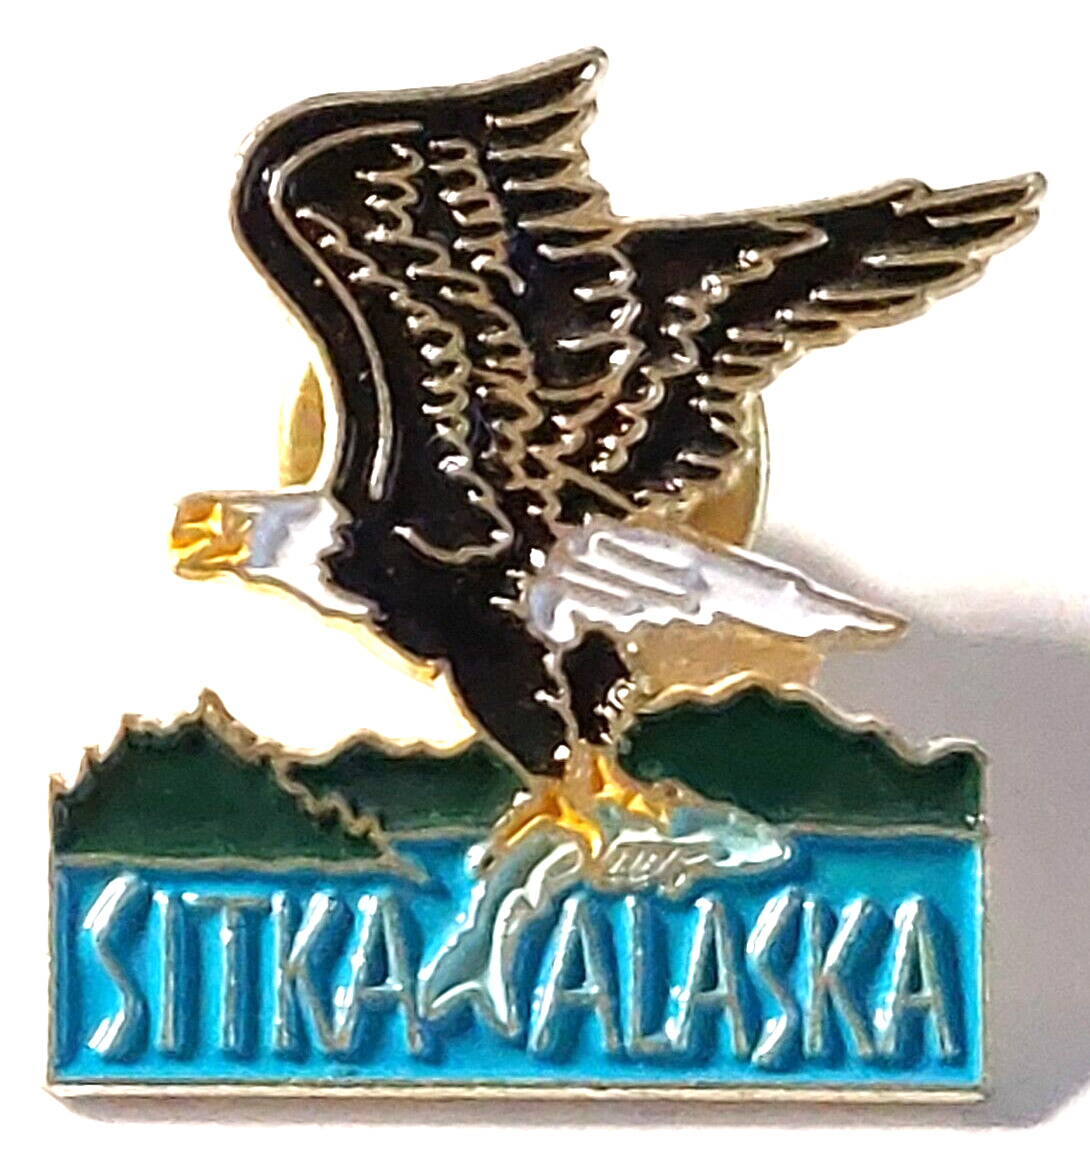 Sitka, Alaska Lapel Pin (062123)